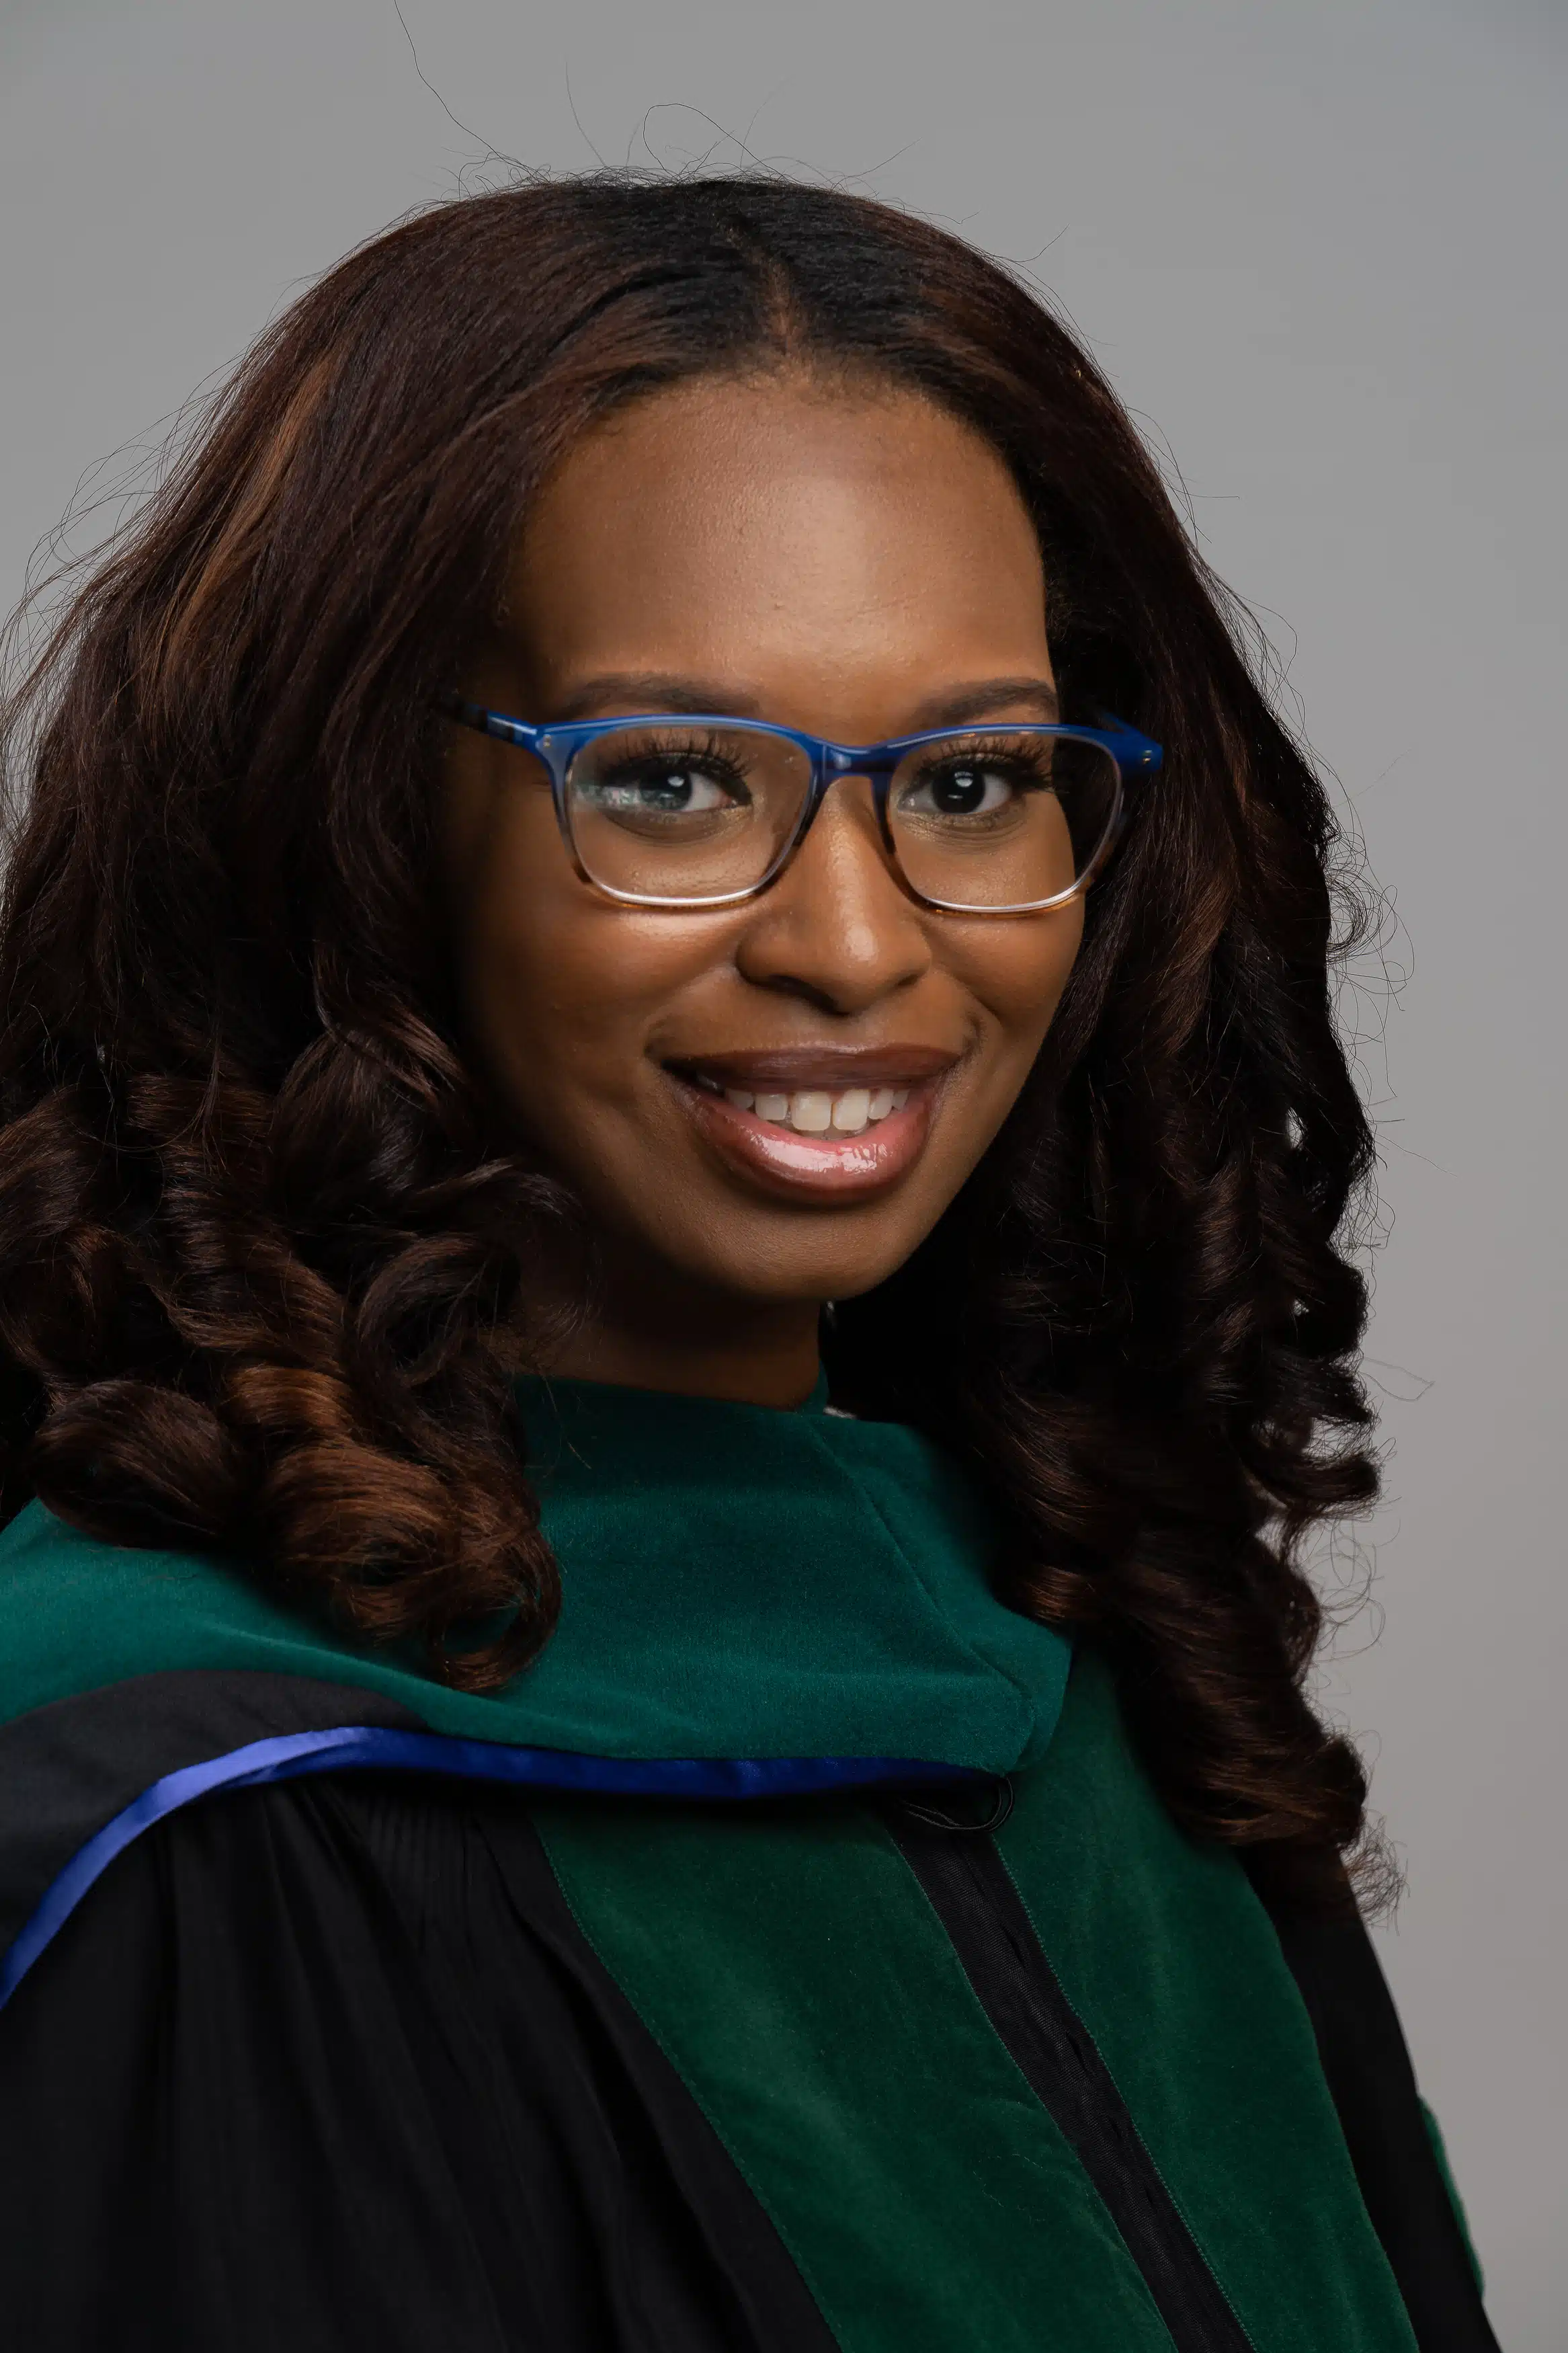 black woman ECU student graduating and taking pre graduation photos and headshot photos for medical school.